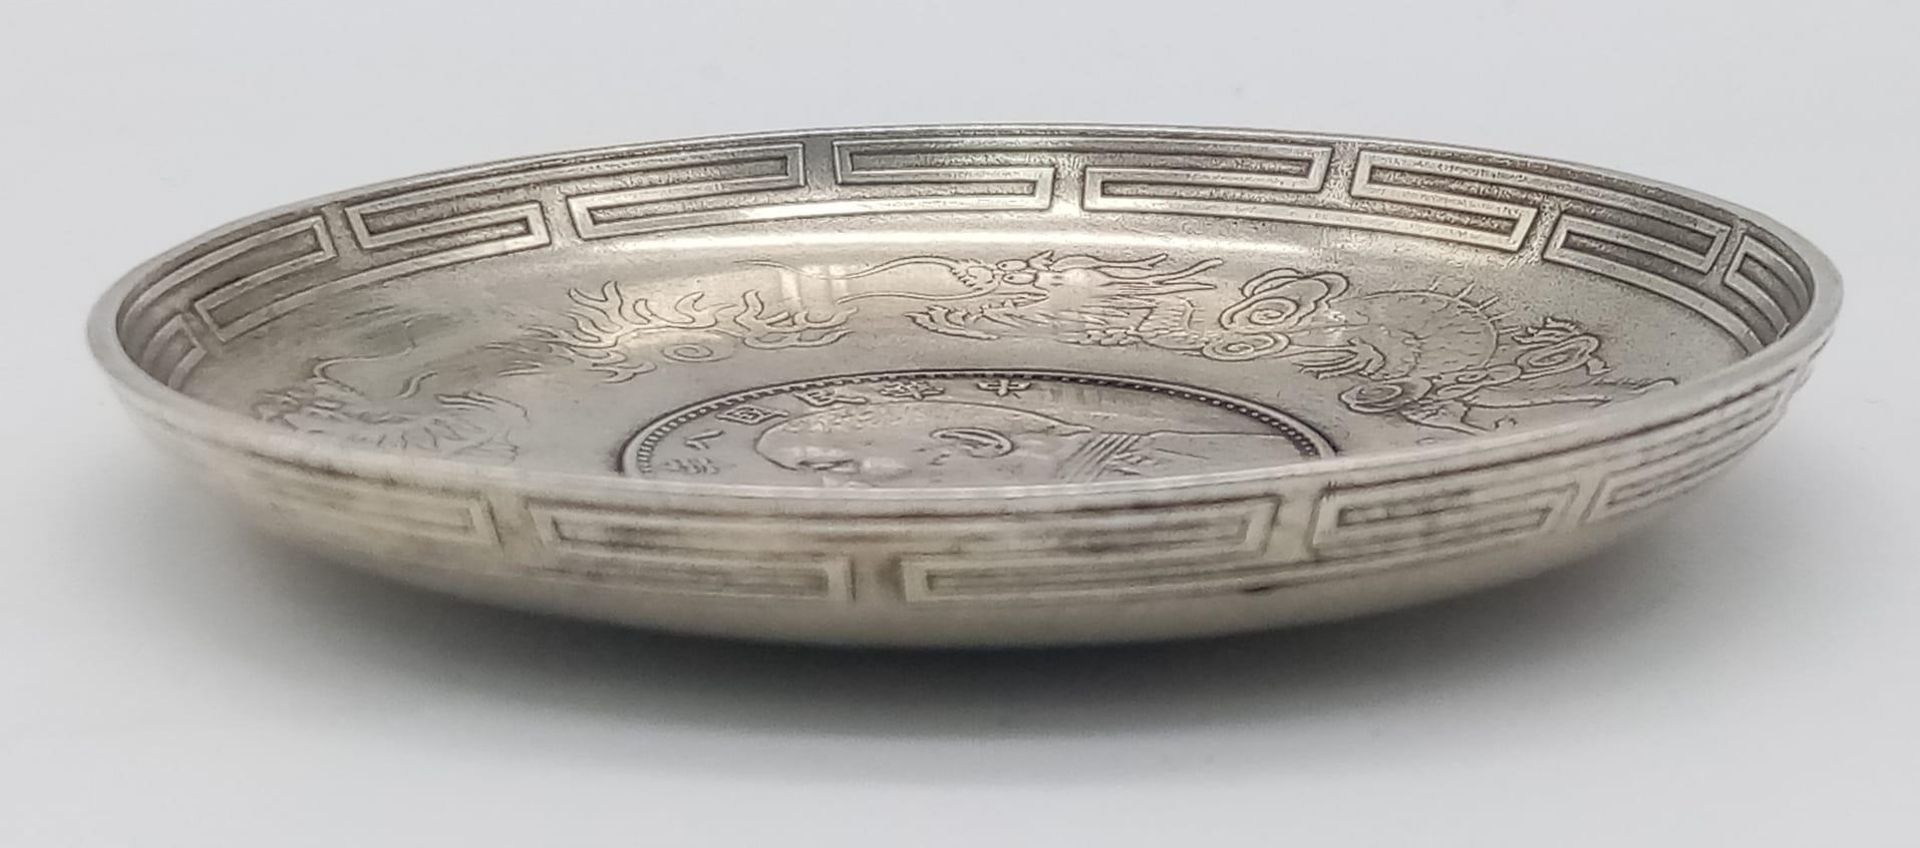 An Antique Chinese Silver, Yuan Coin Set, Dragon & Bat Detail Dish. Circa 1914, it measures 9.3cm - Image 5 of 5